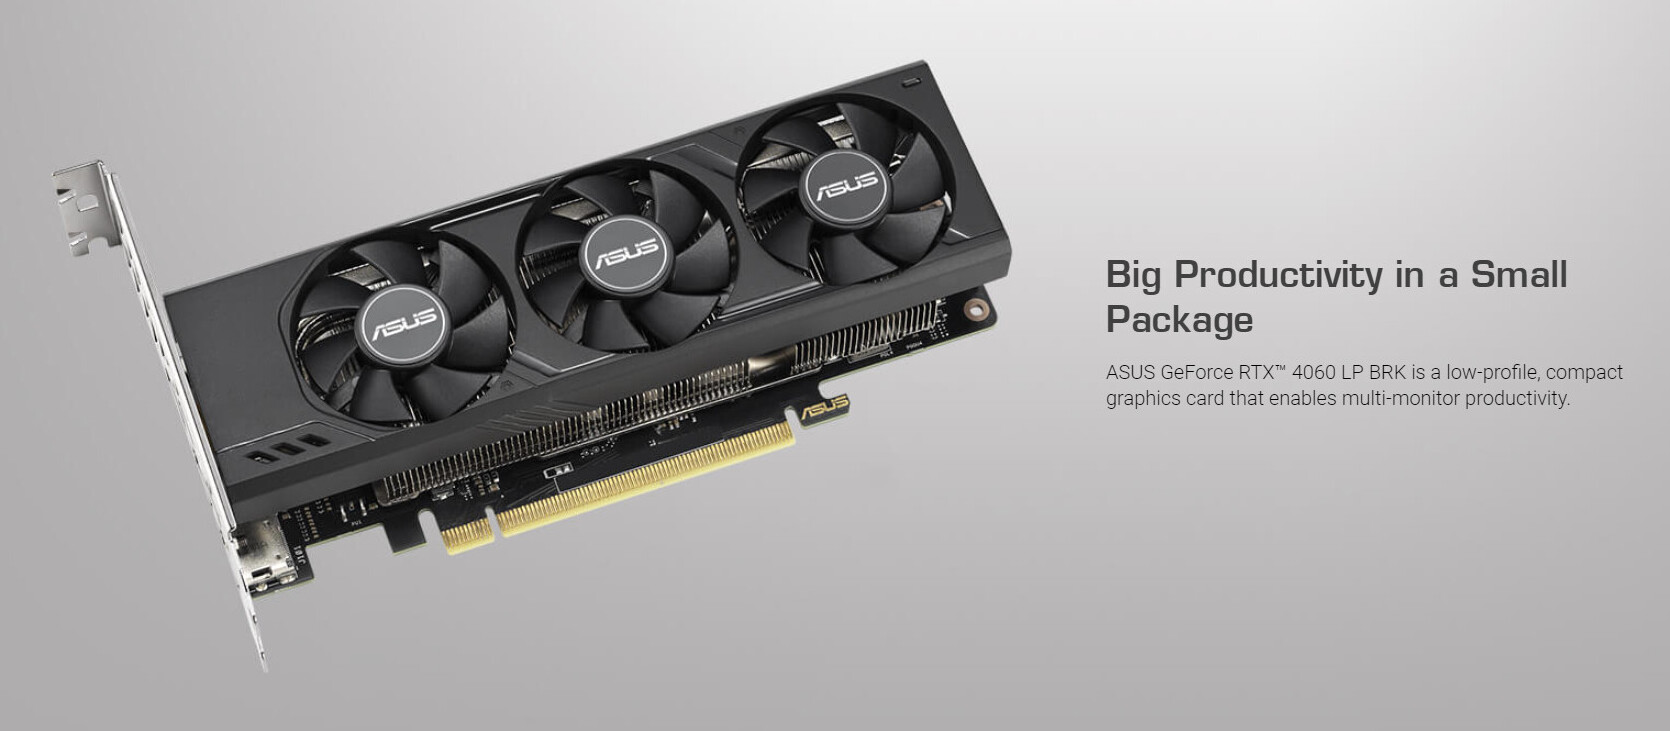 NVIDIA GeForce RTX 4060 Ti 16 GB GPU Now Comes In Single-Slot & Blower-Fan  Design